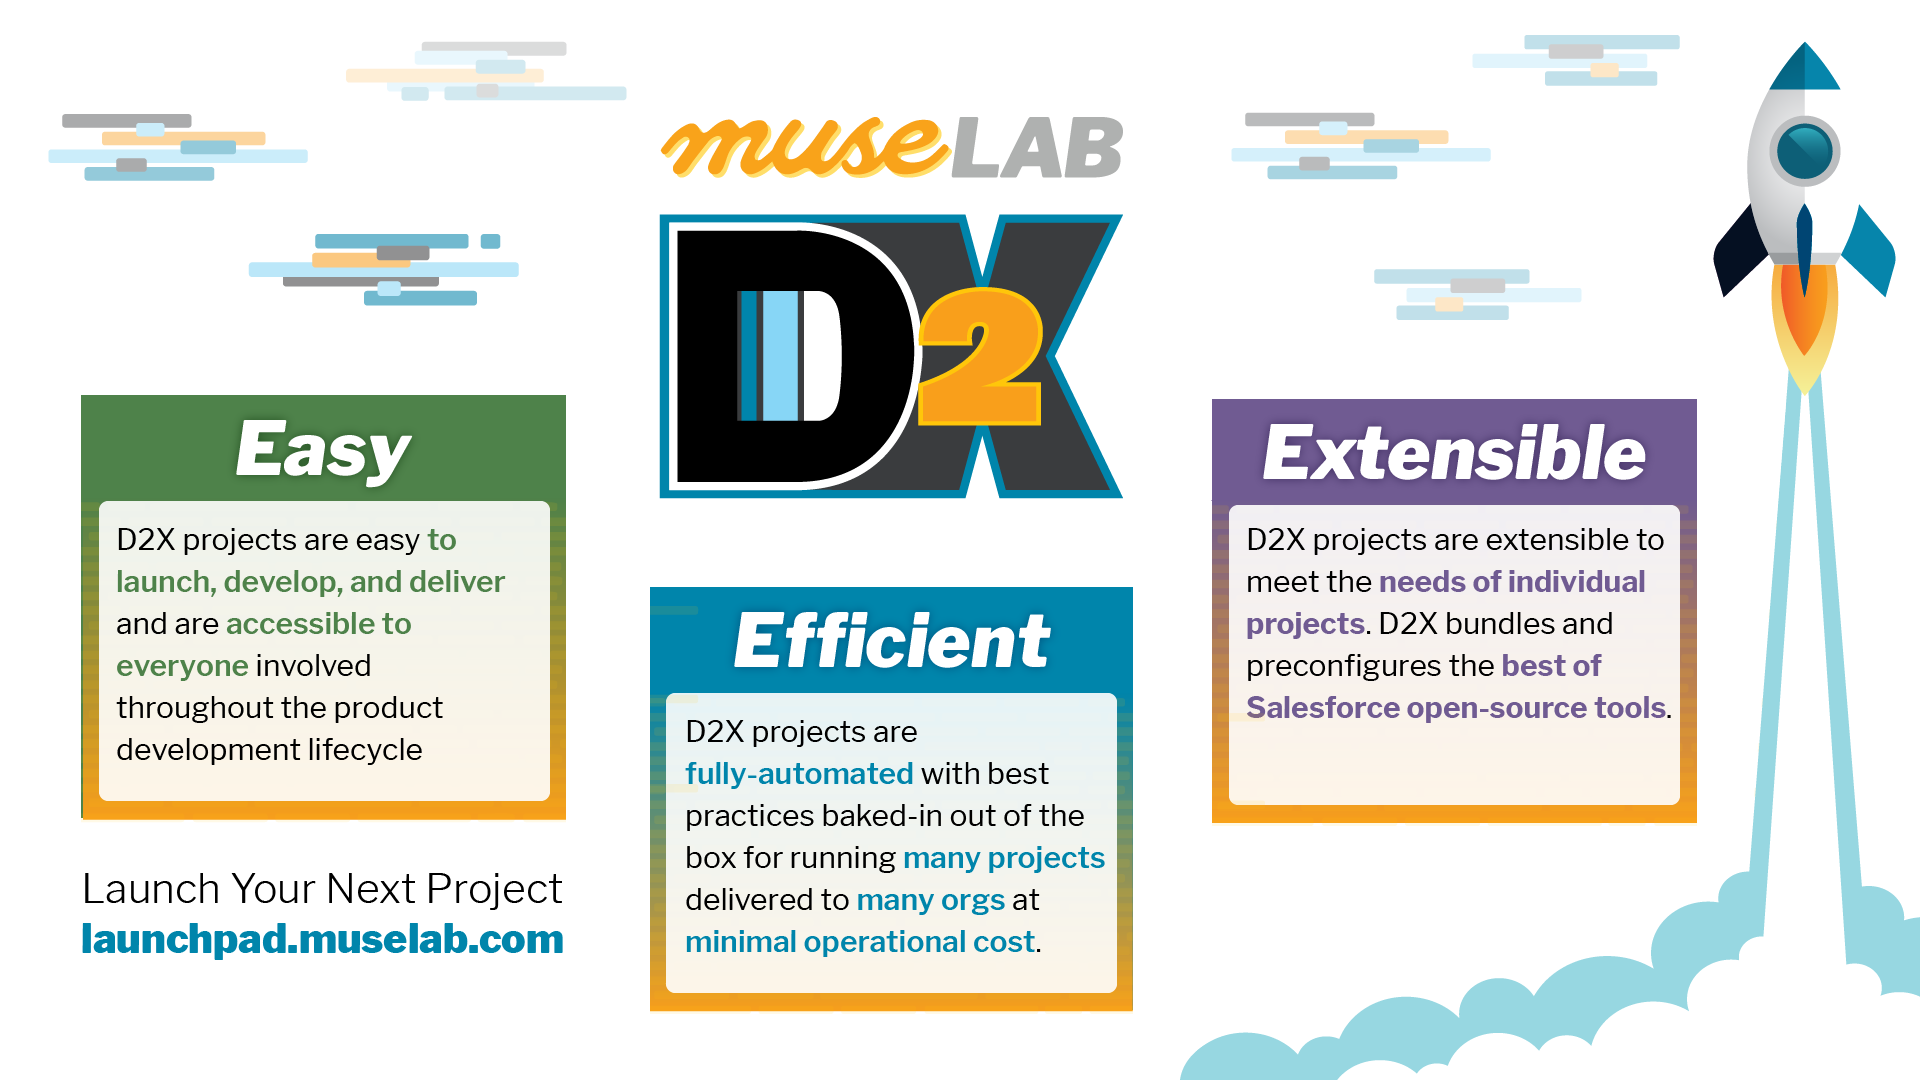 D2X Goals - Easy, Efficient, Extensible